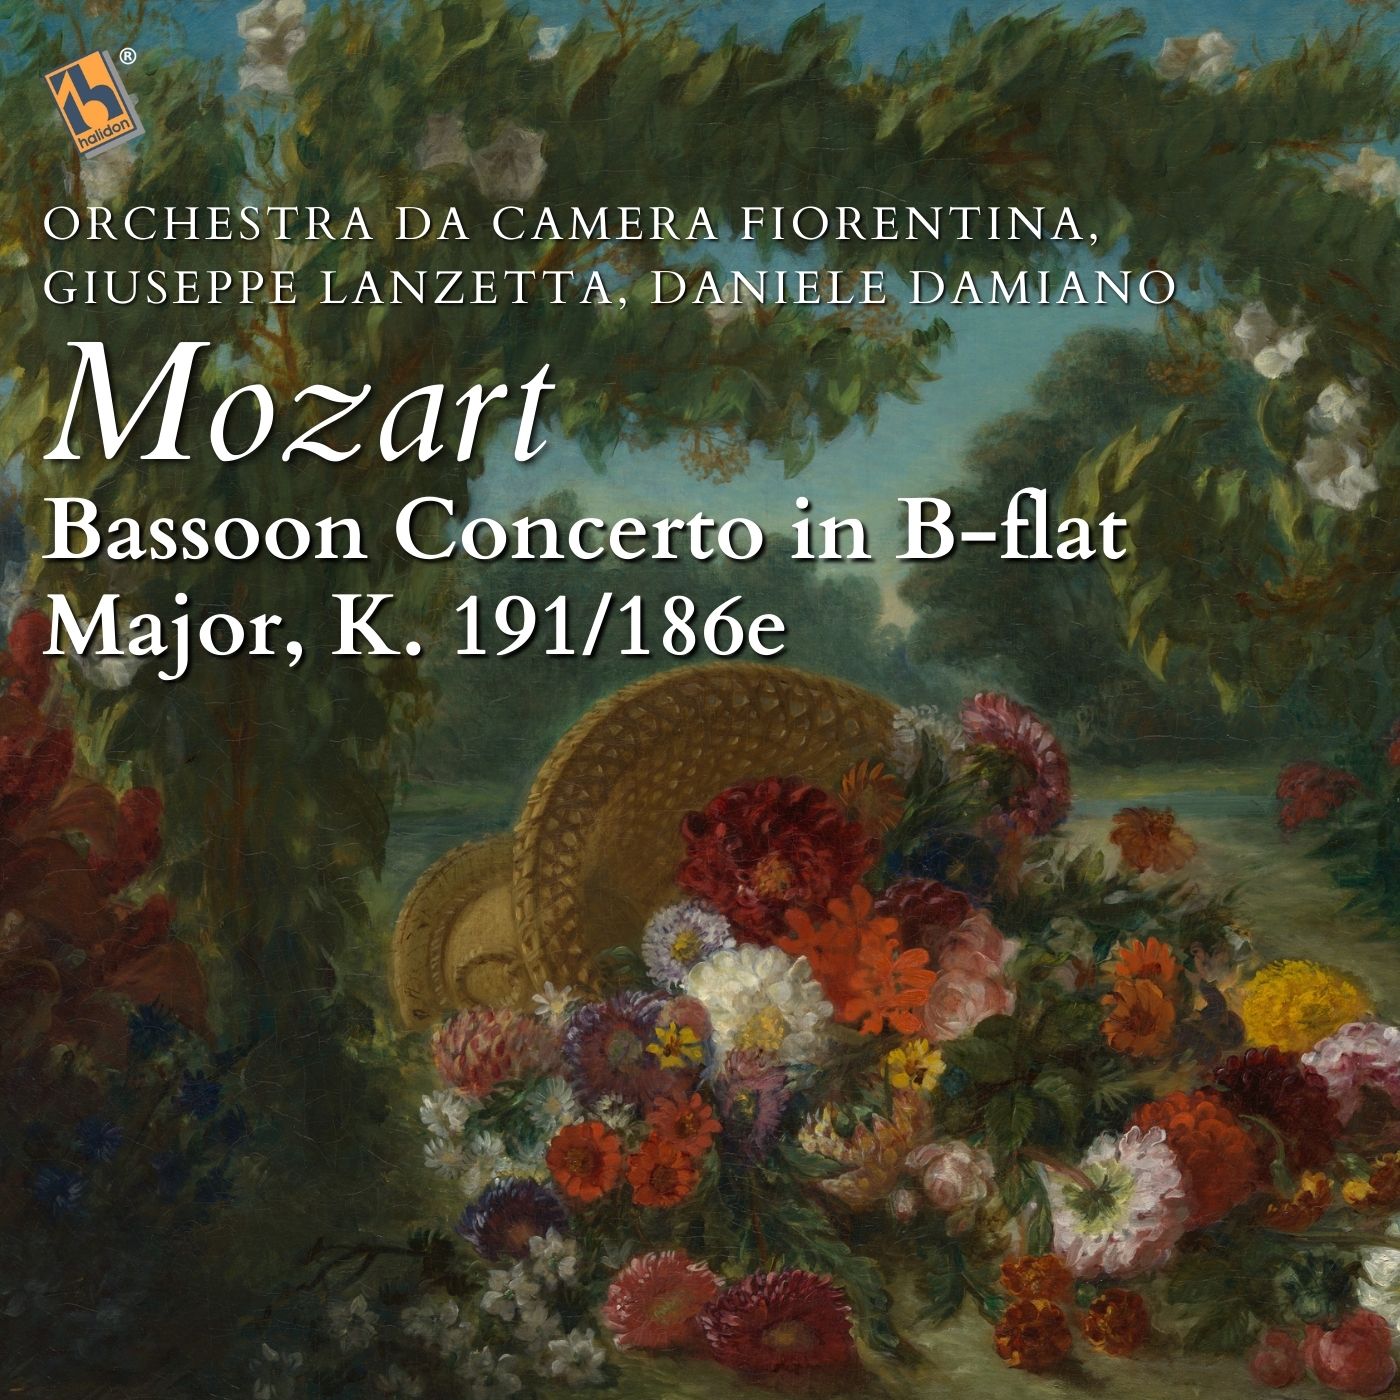 Mozart: Bassoon Concerto in B-flat major, K. 191/186e (Live)